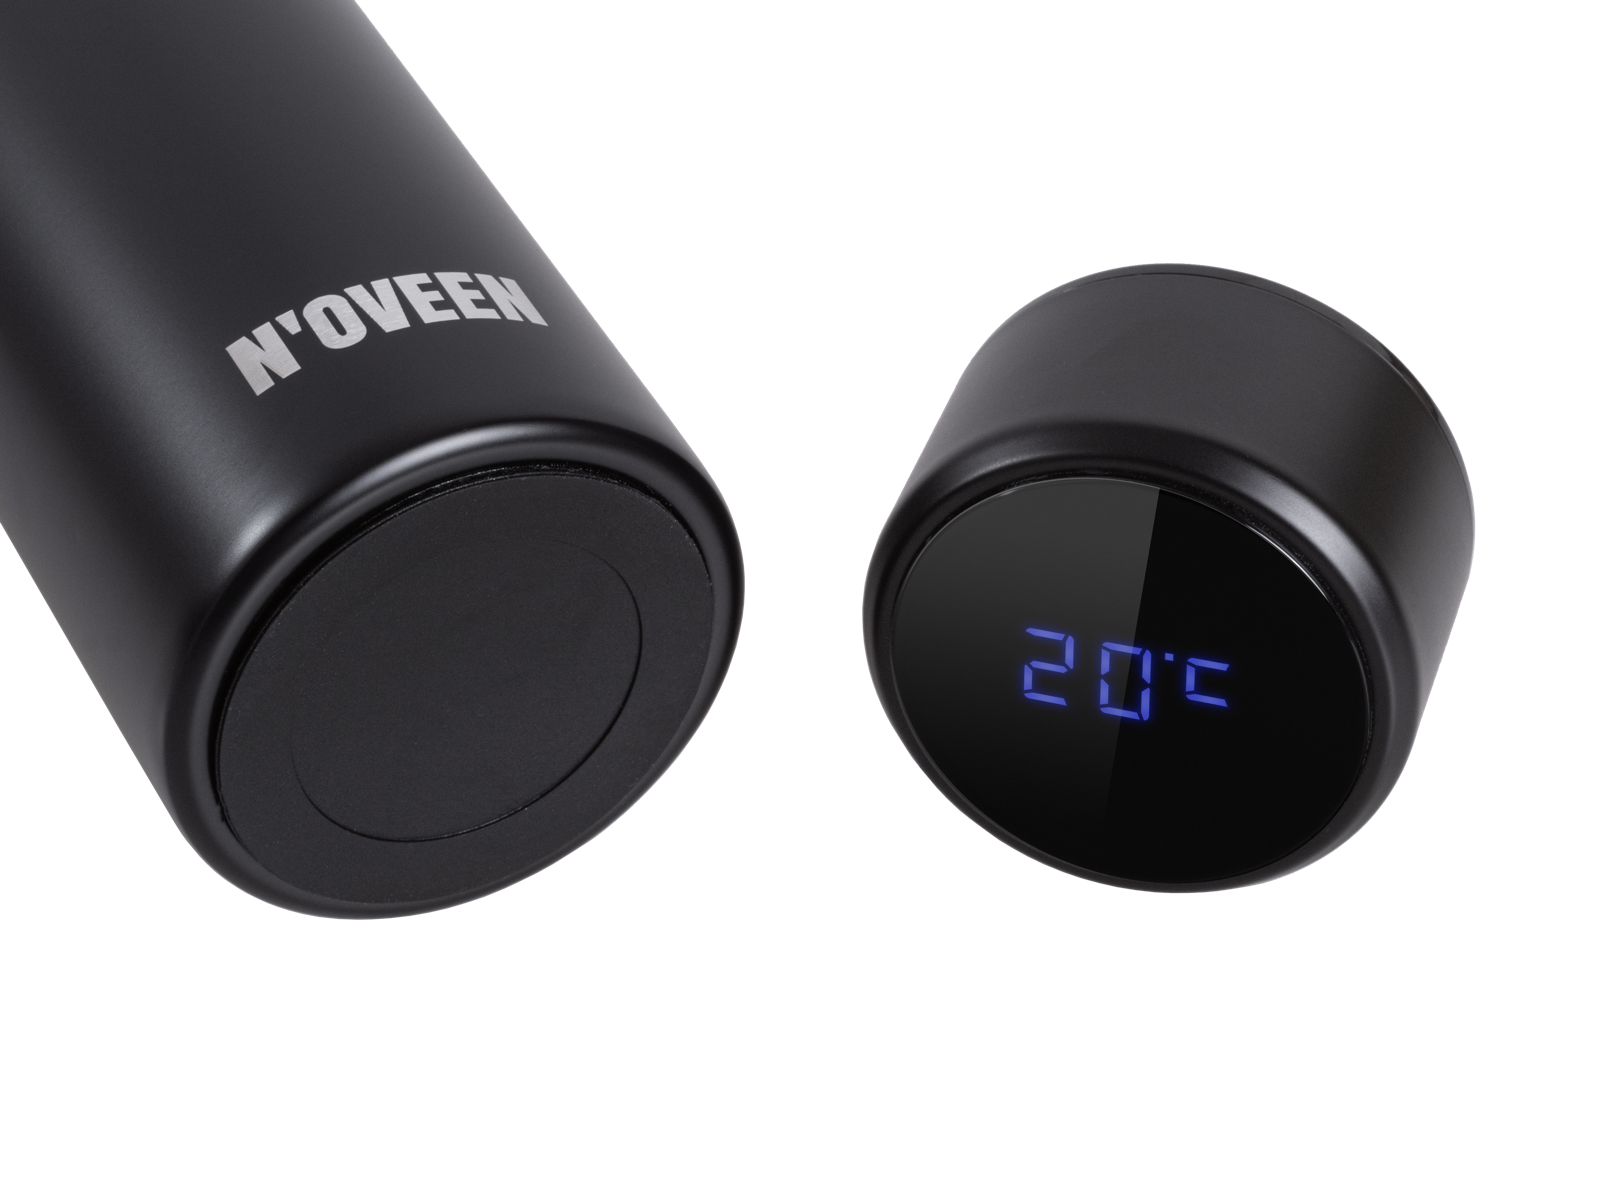 Smart termoflaske LED - 380 ml INOX, Svart